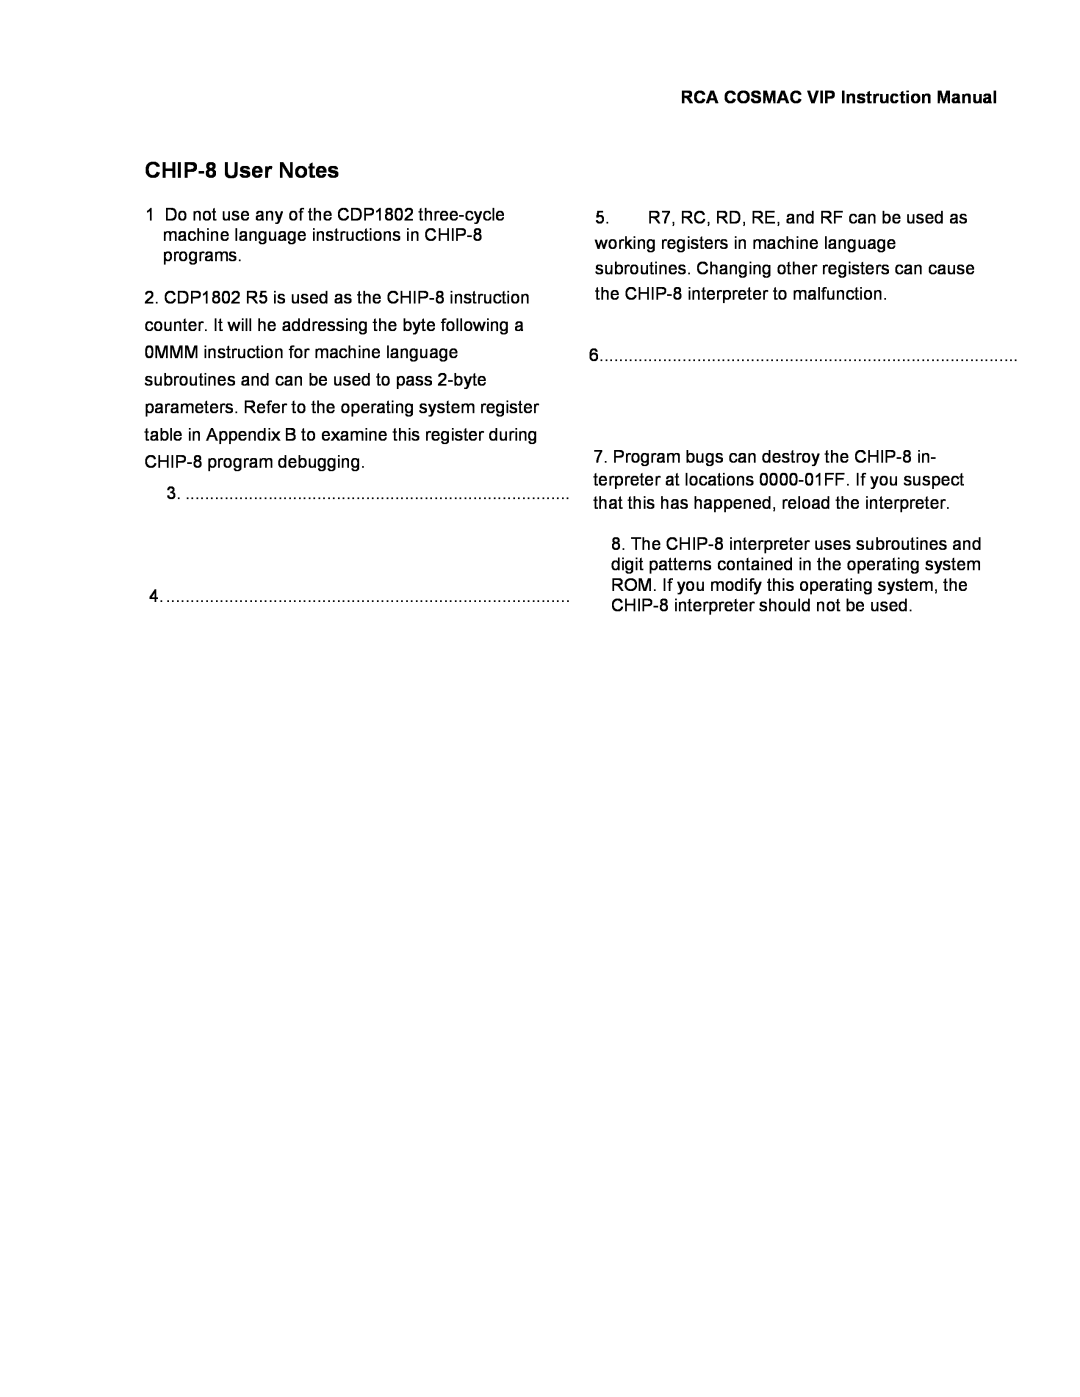 RCA CDP18S711 manual CHIP-8User Notes, RCA COSMAC VIP Instruction Manual 